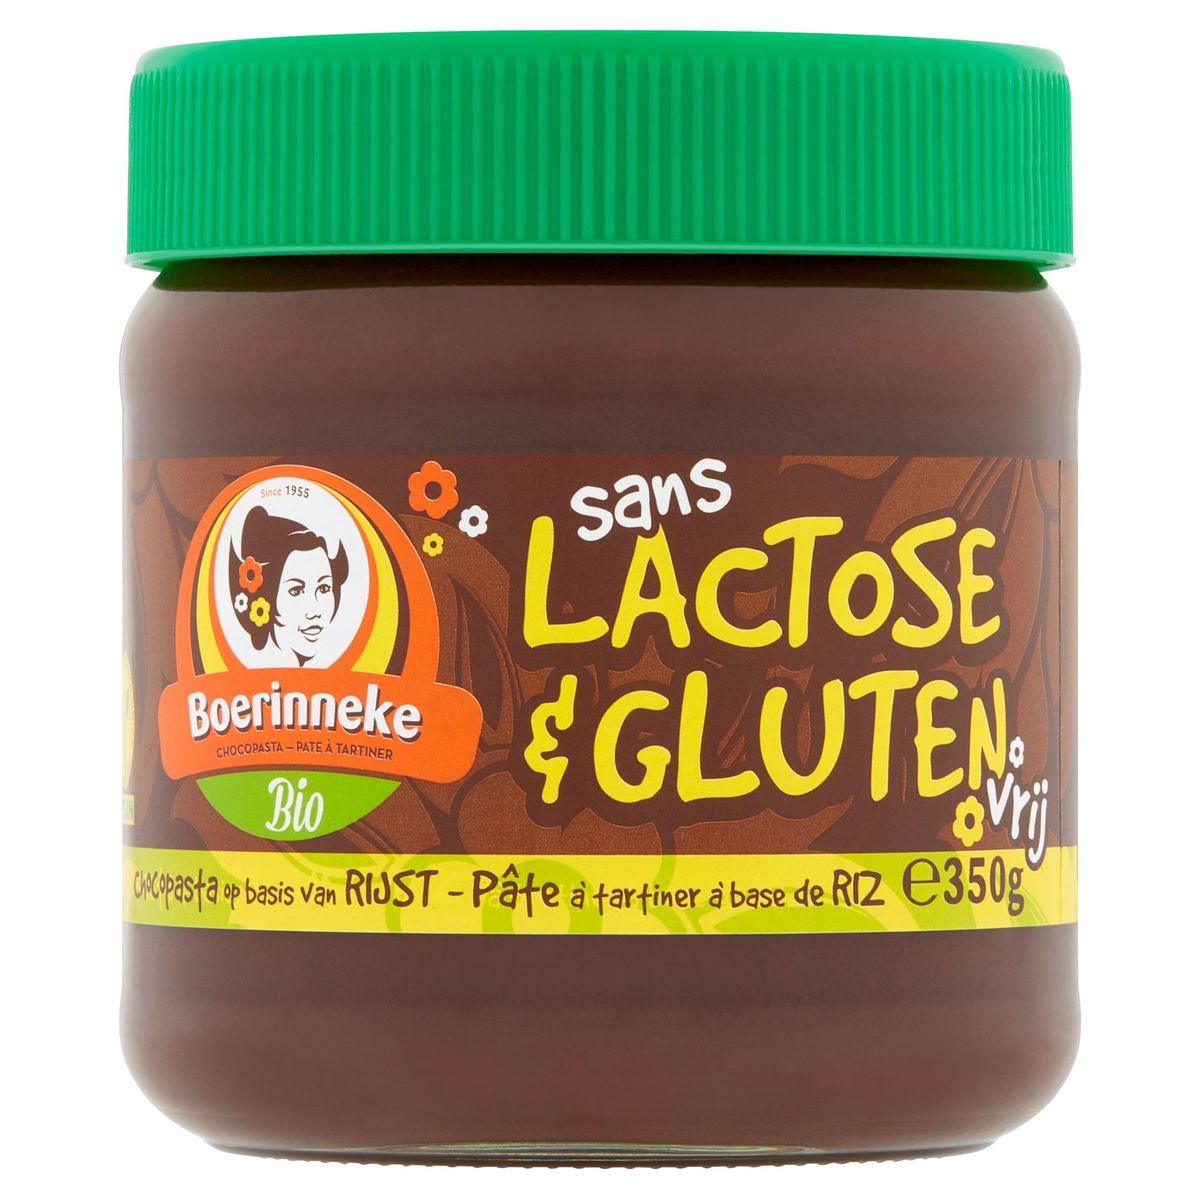 Boerinneke Bio Lactose & Glutenvrij Chocopasta Basis van Rijst 350 g